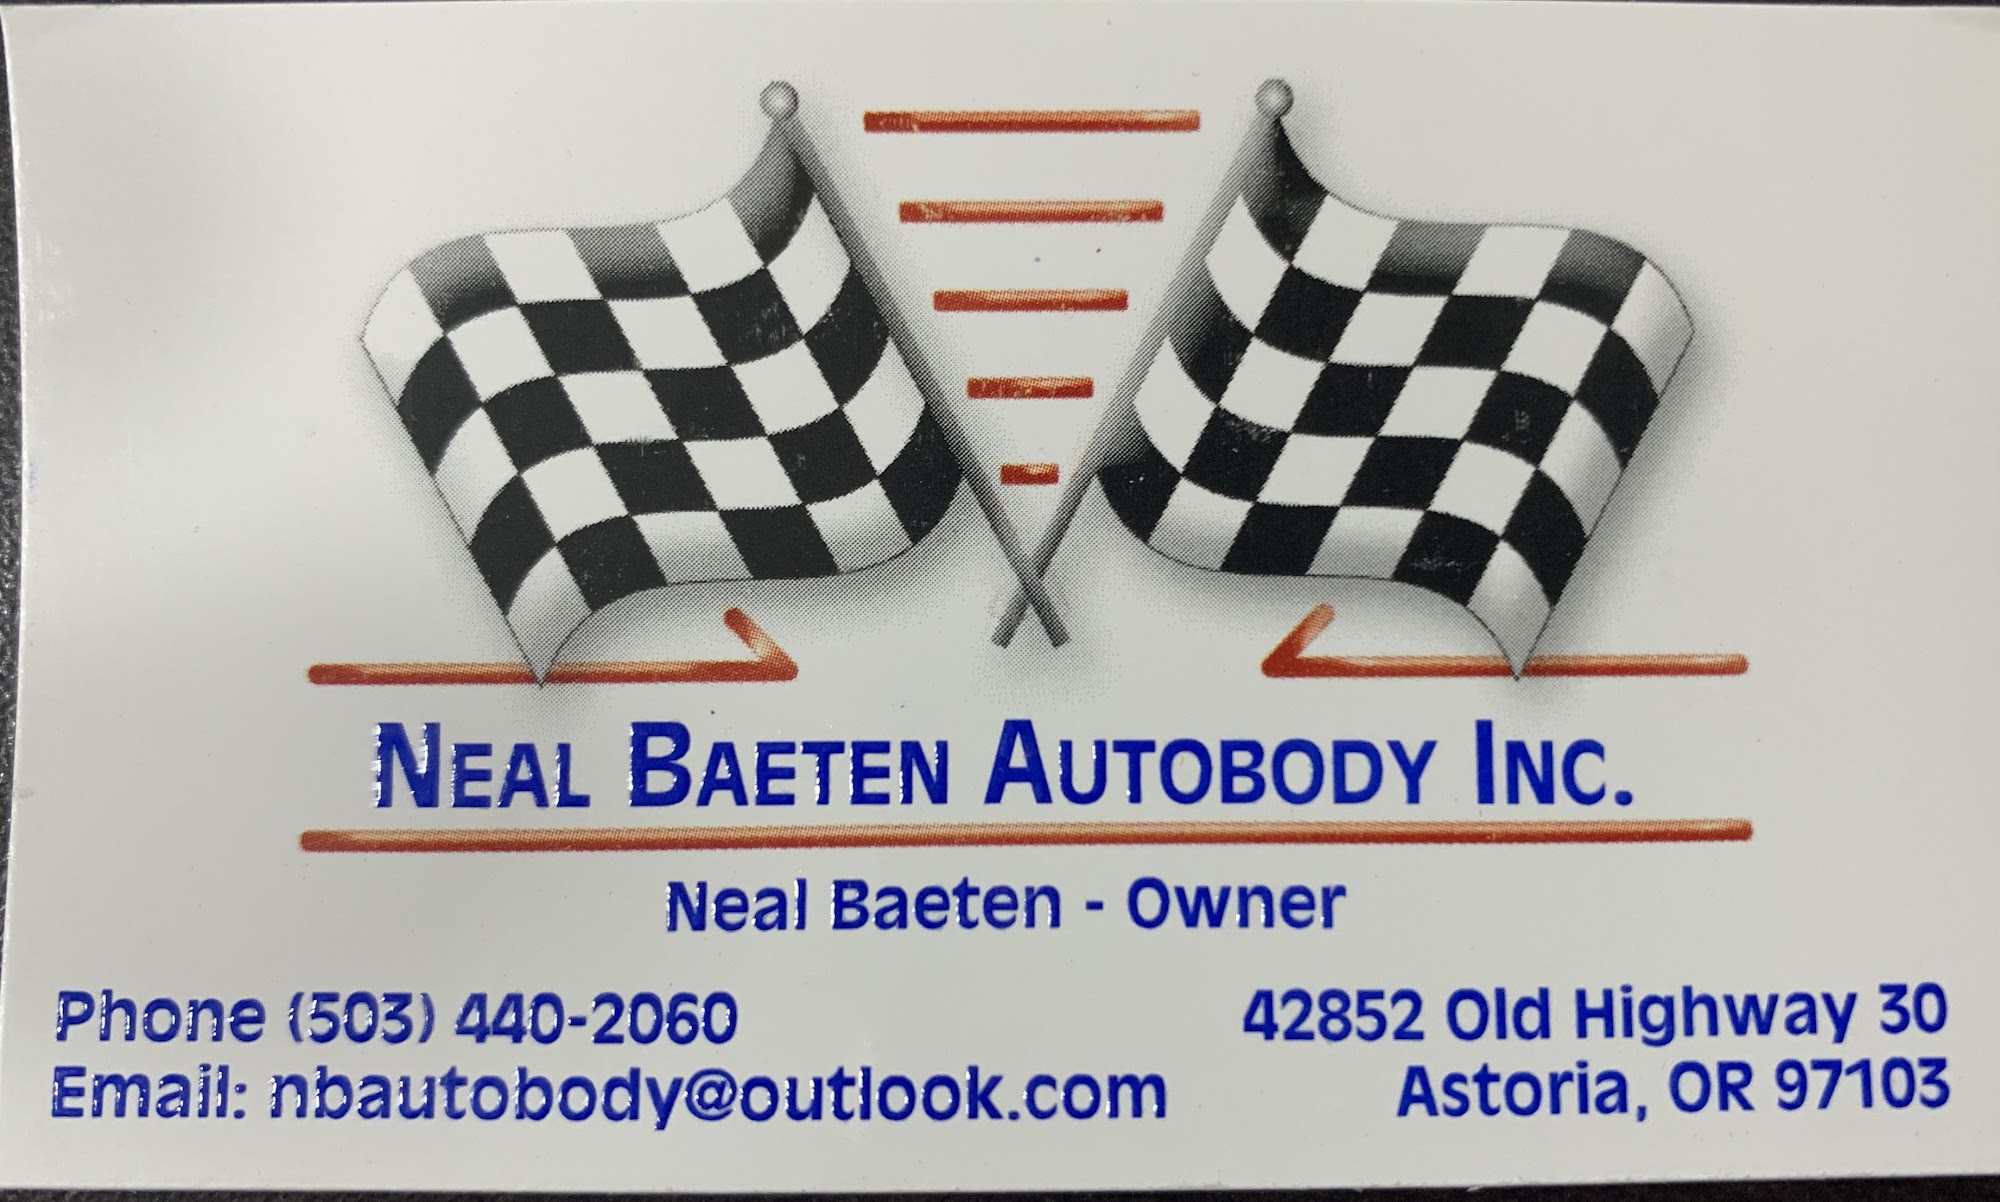 Neal Baeten Autobody Inc.